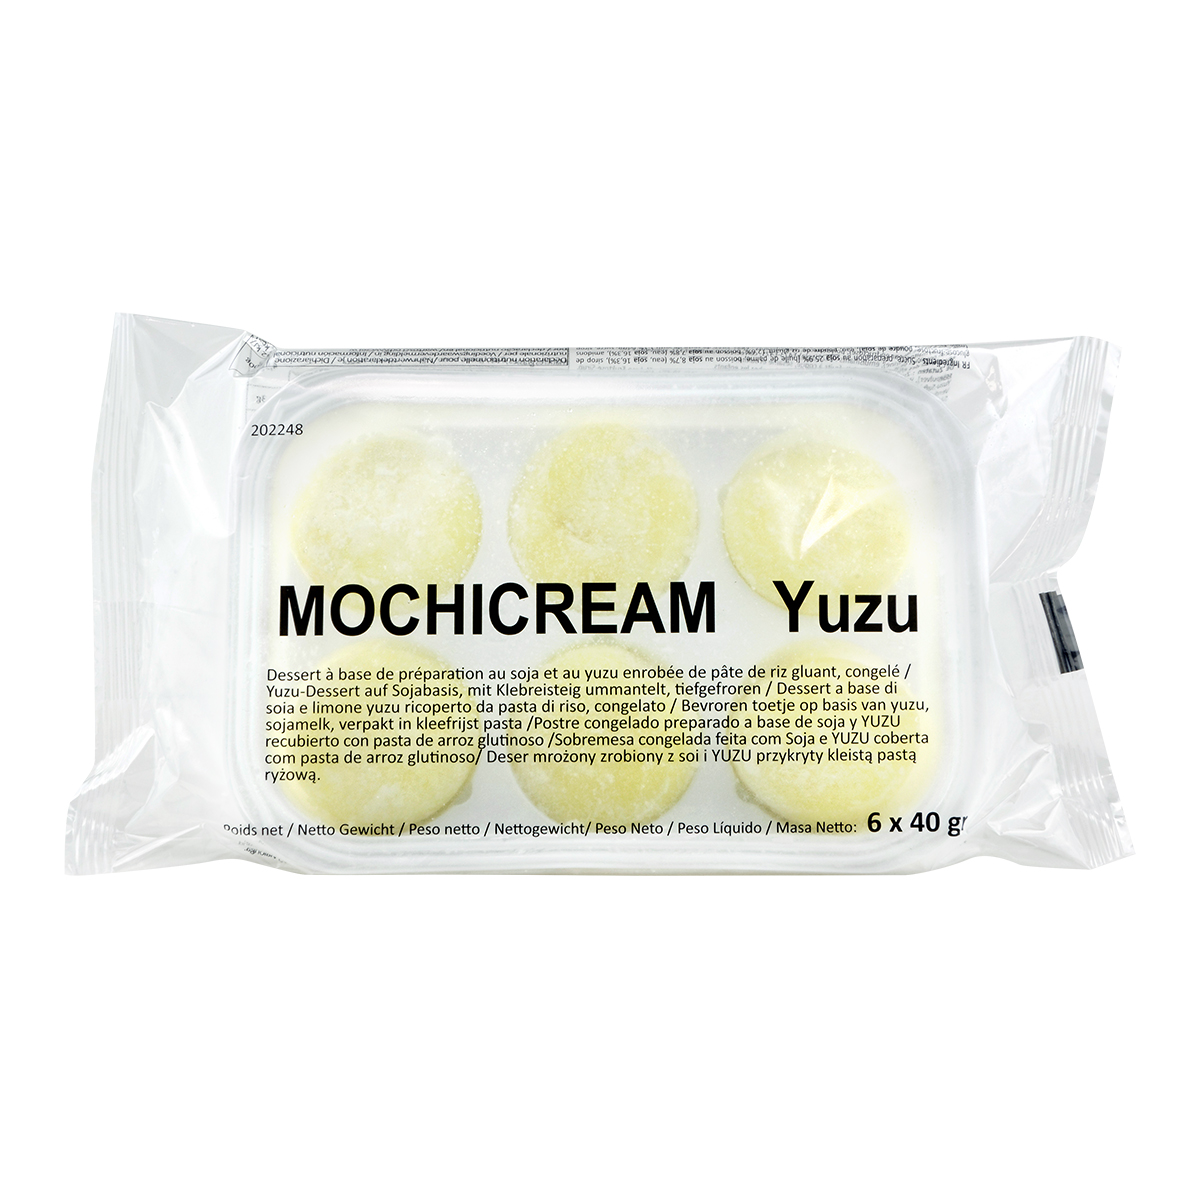 Exclusiv in magazine - Mochi Cream Yuzu FOODEX 240g (6x40g), asianfood.ro